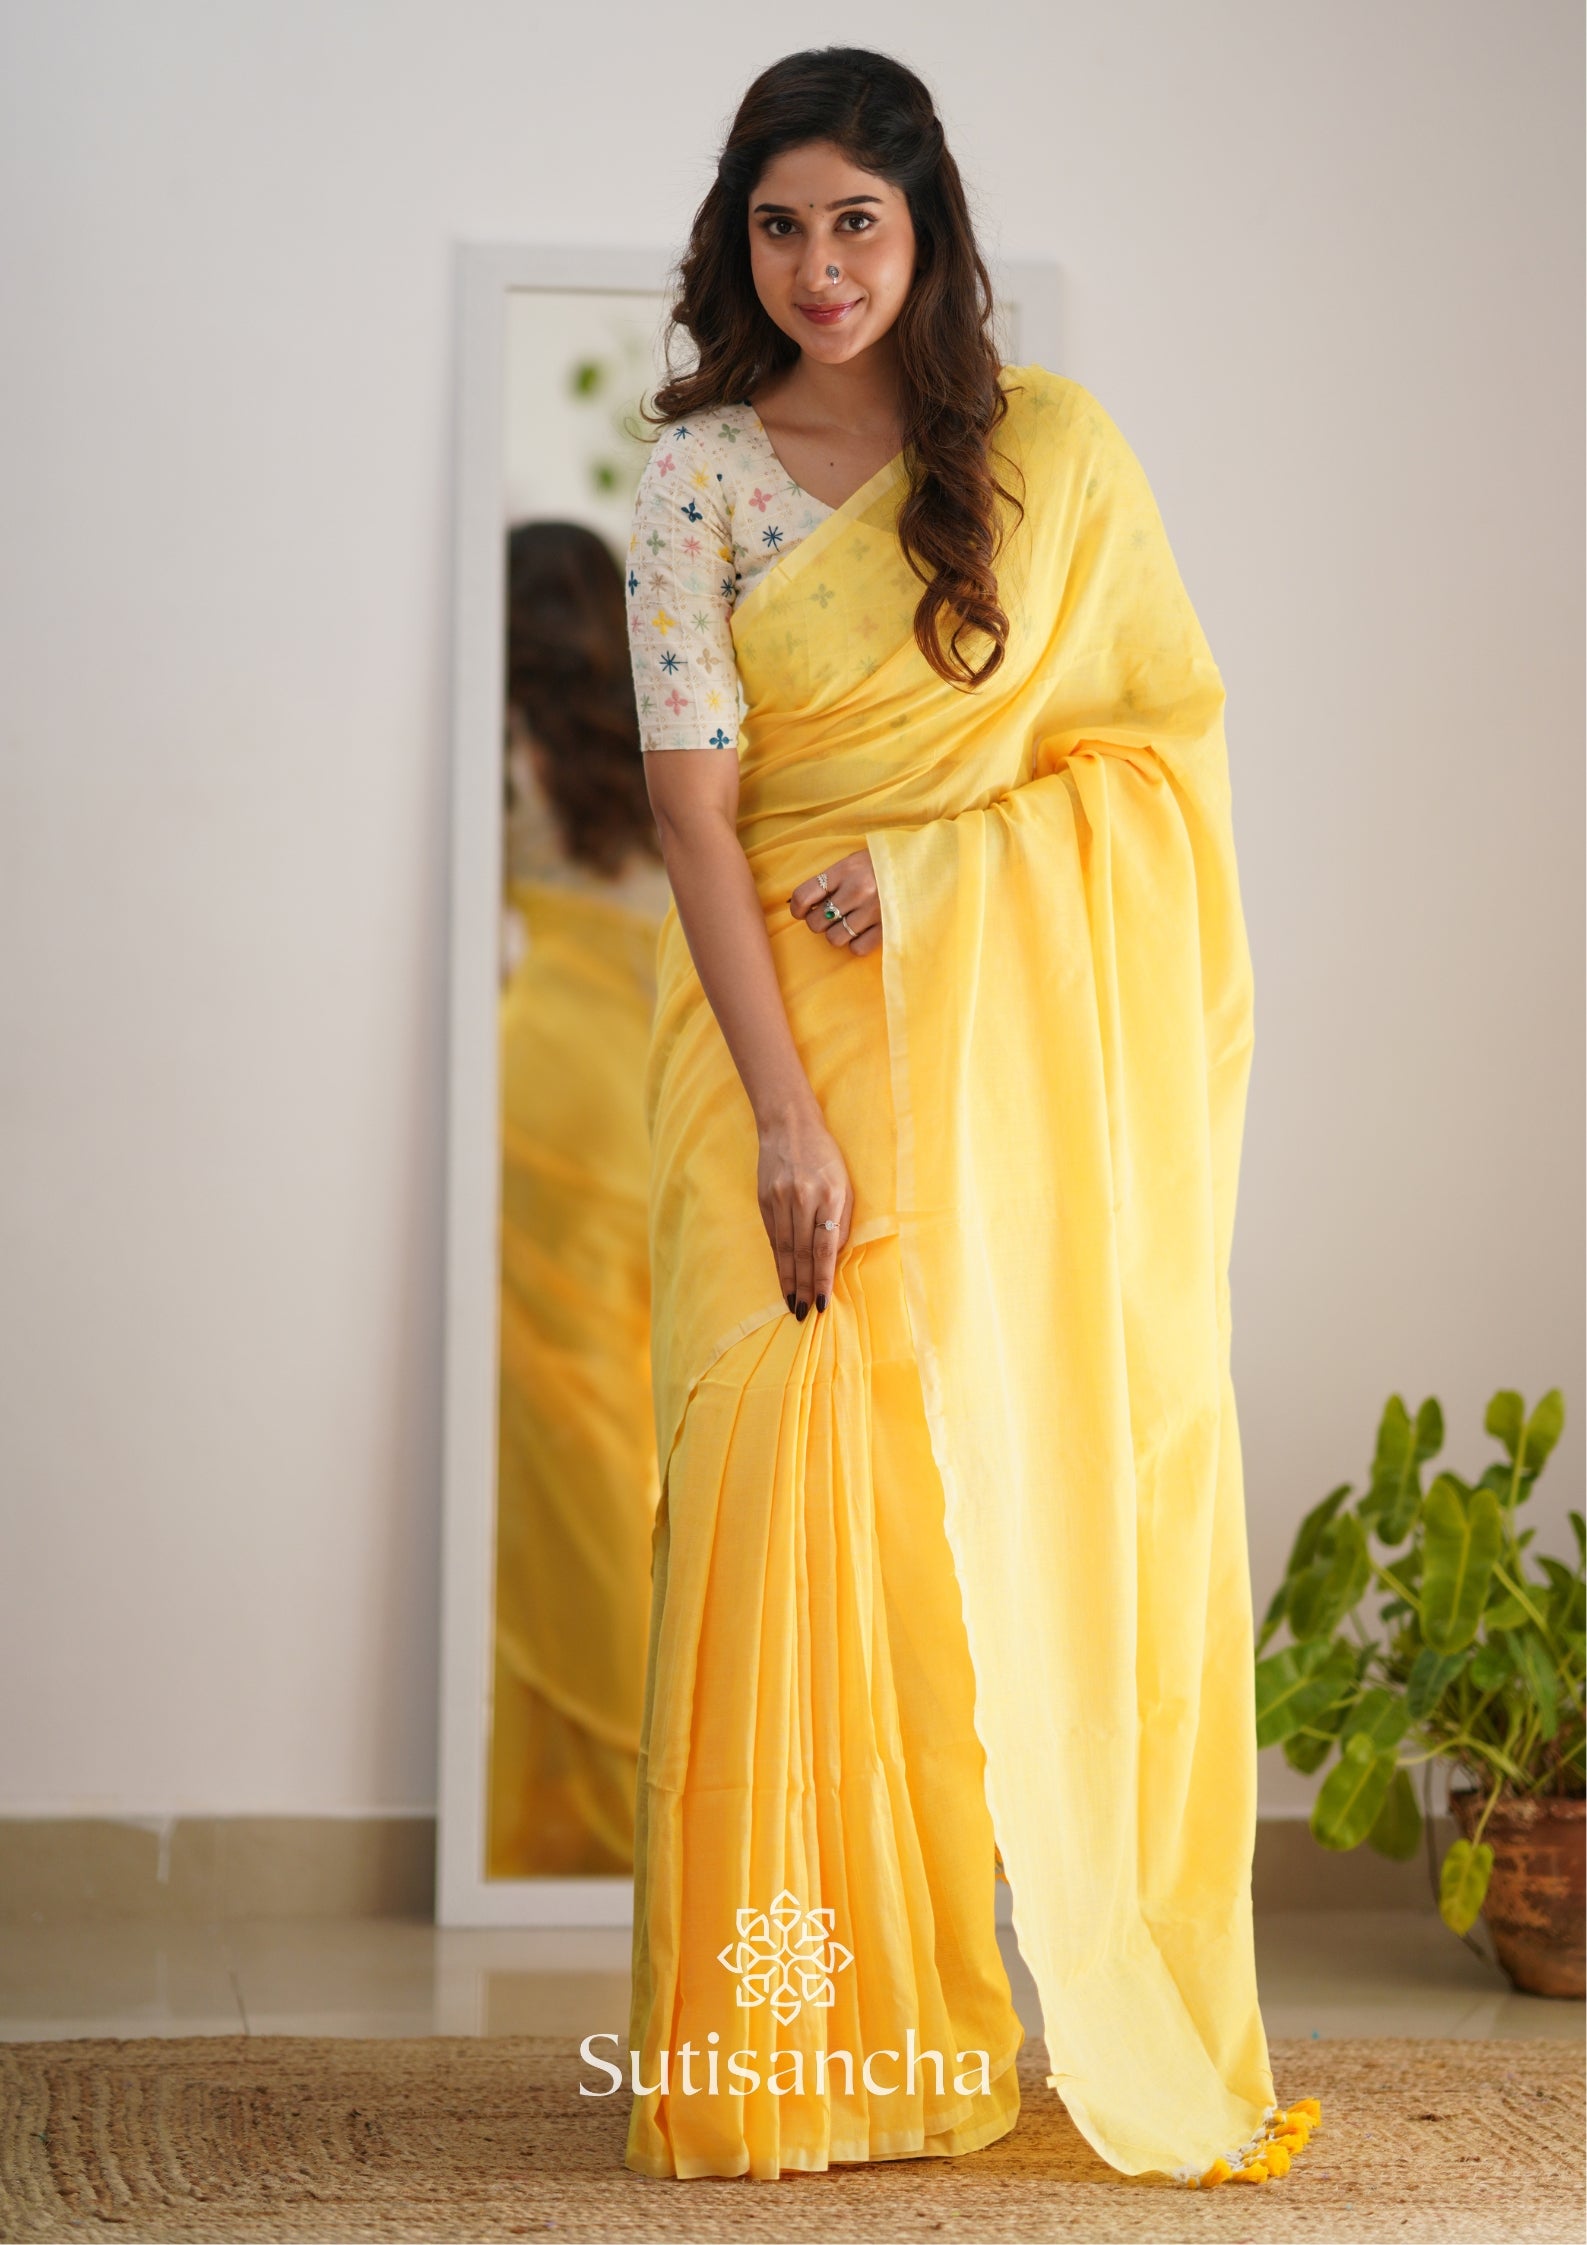 Sutisancha Yellow Handloom Cotton Saree with Designer Blouse